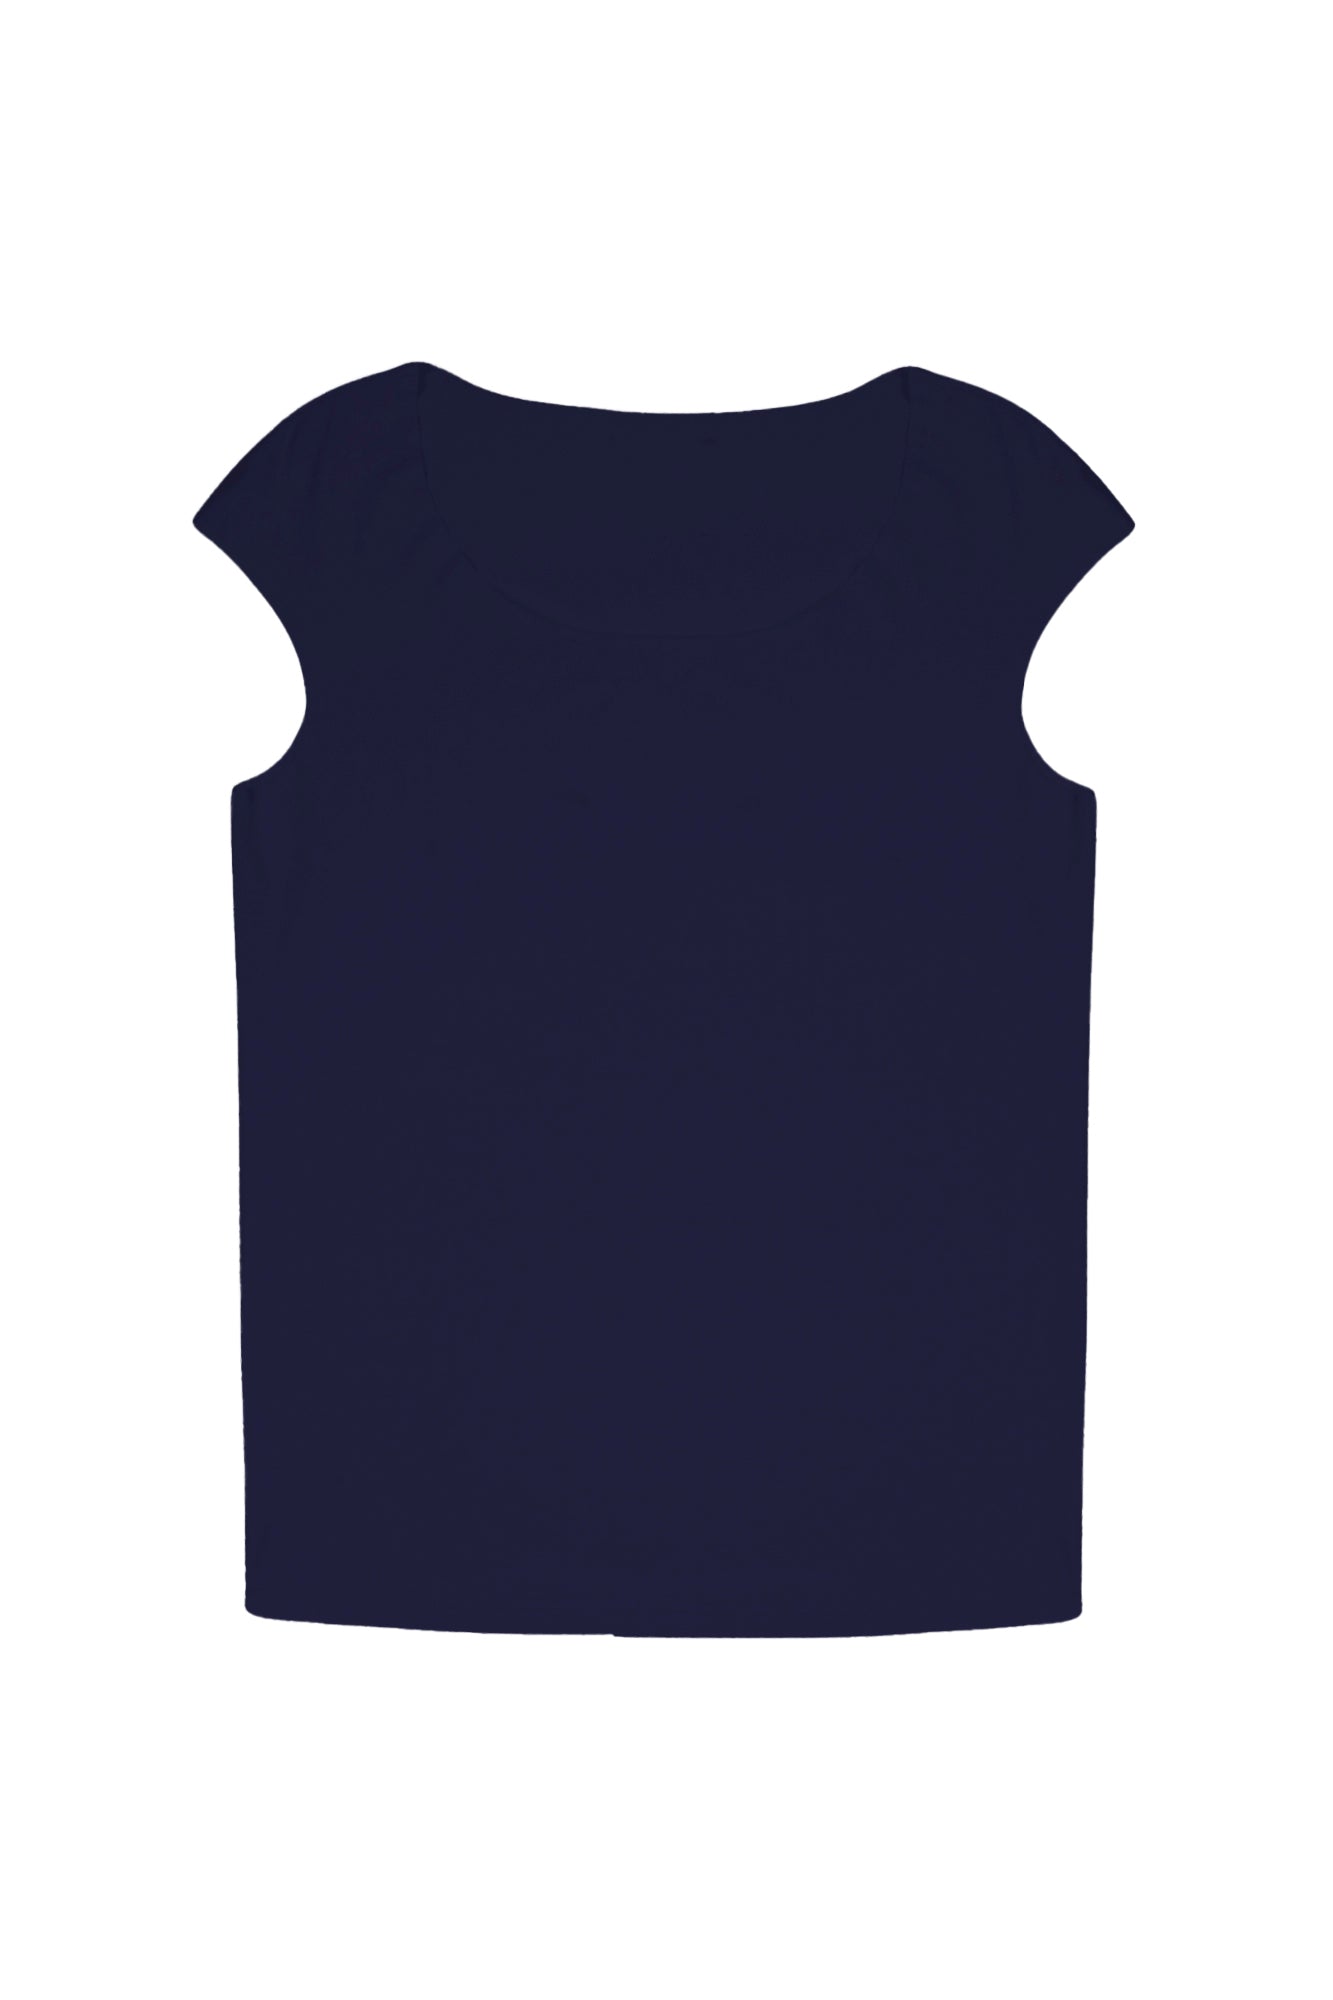 La Femme Blanche - T-shirt - 431479 - Blu